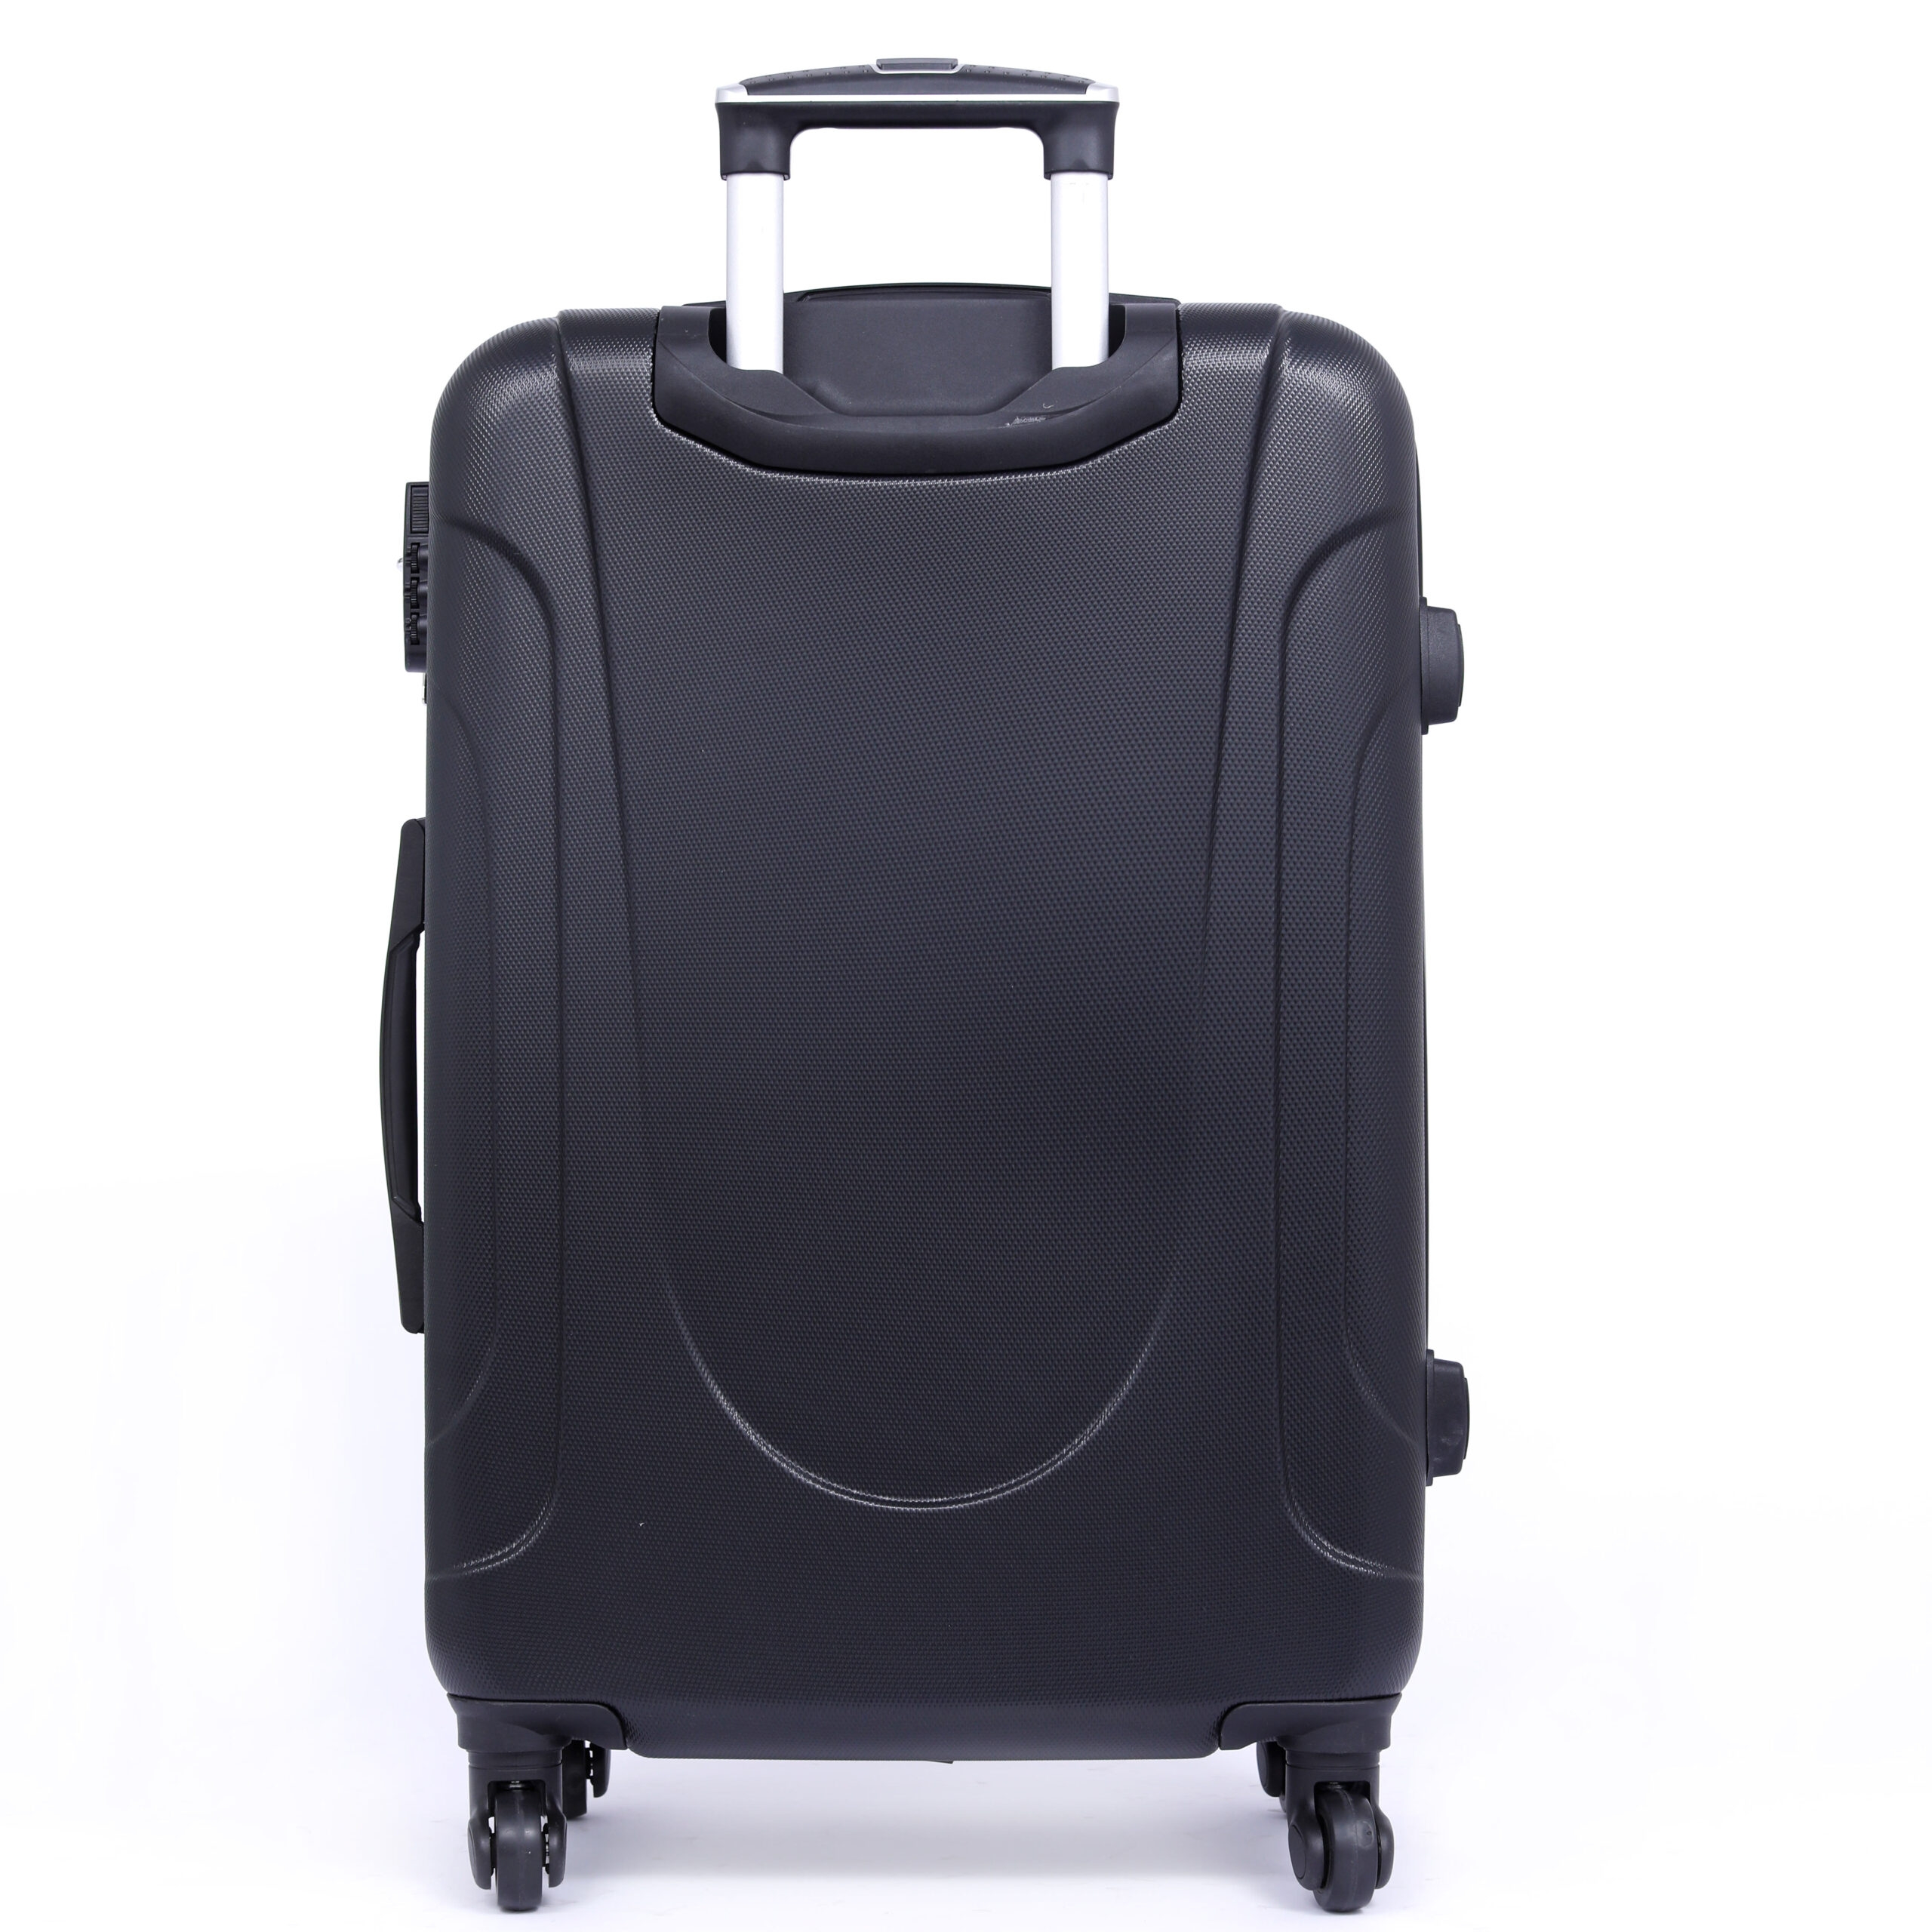 طقم حقائب سفر 3 حقائب مادة ABS بعجلات دوارة (20 ، 24 ، 28) بوصة أسود PARA JOHN - Travel Luggage Suitcase Set of 3 -  Trolley Bag, Carry On Hand Cabin Luggage Bag - Lightweight (20 ، 24 ، 28) inch